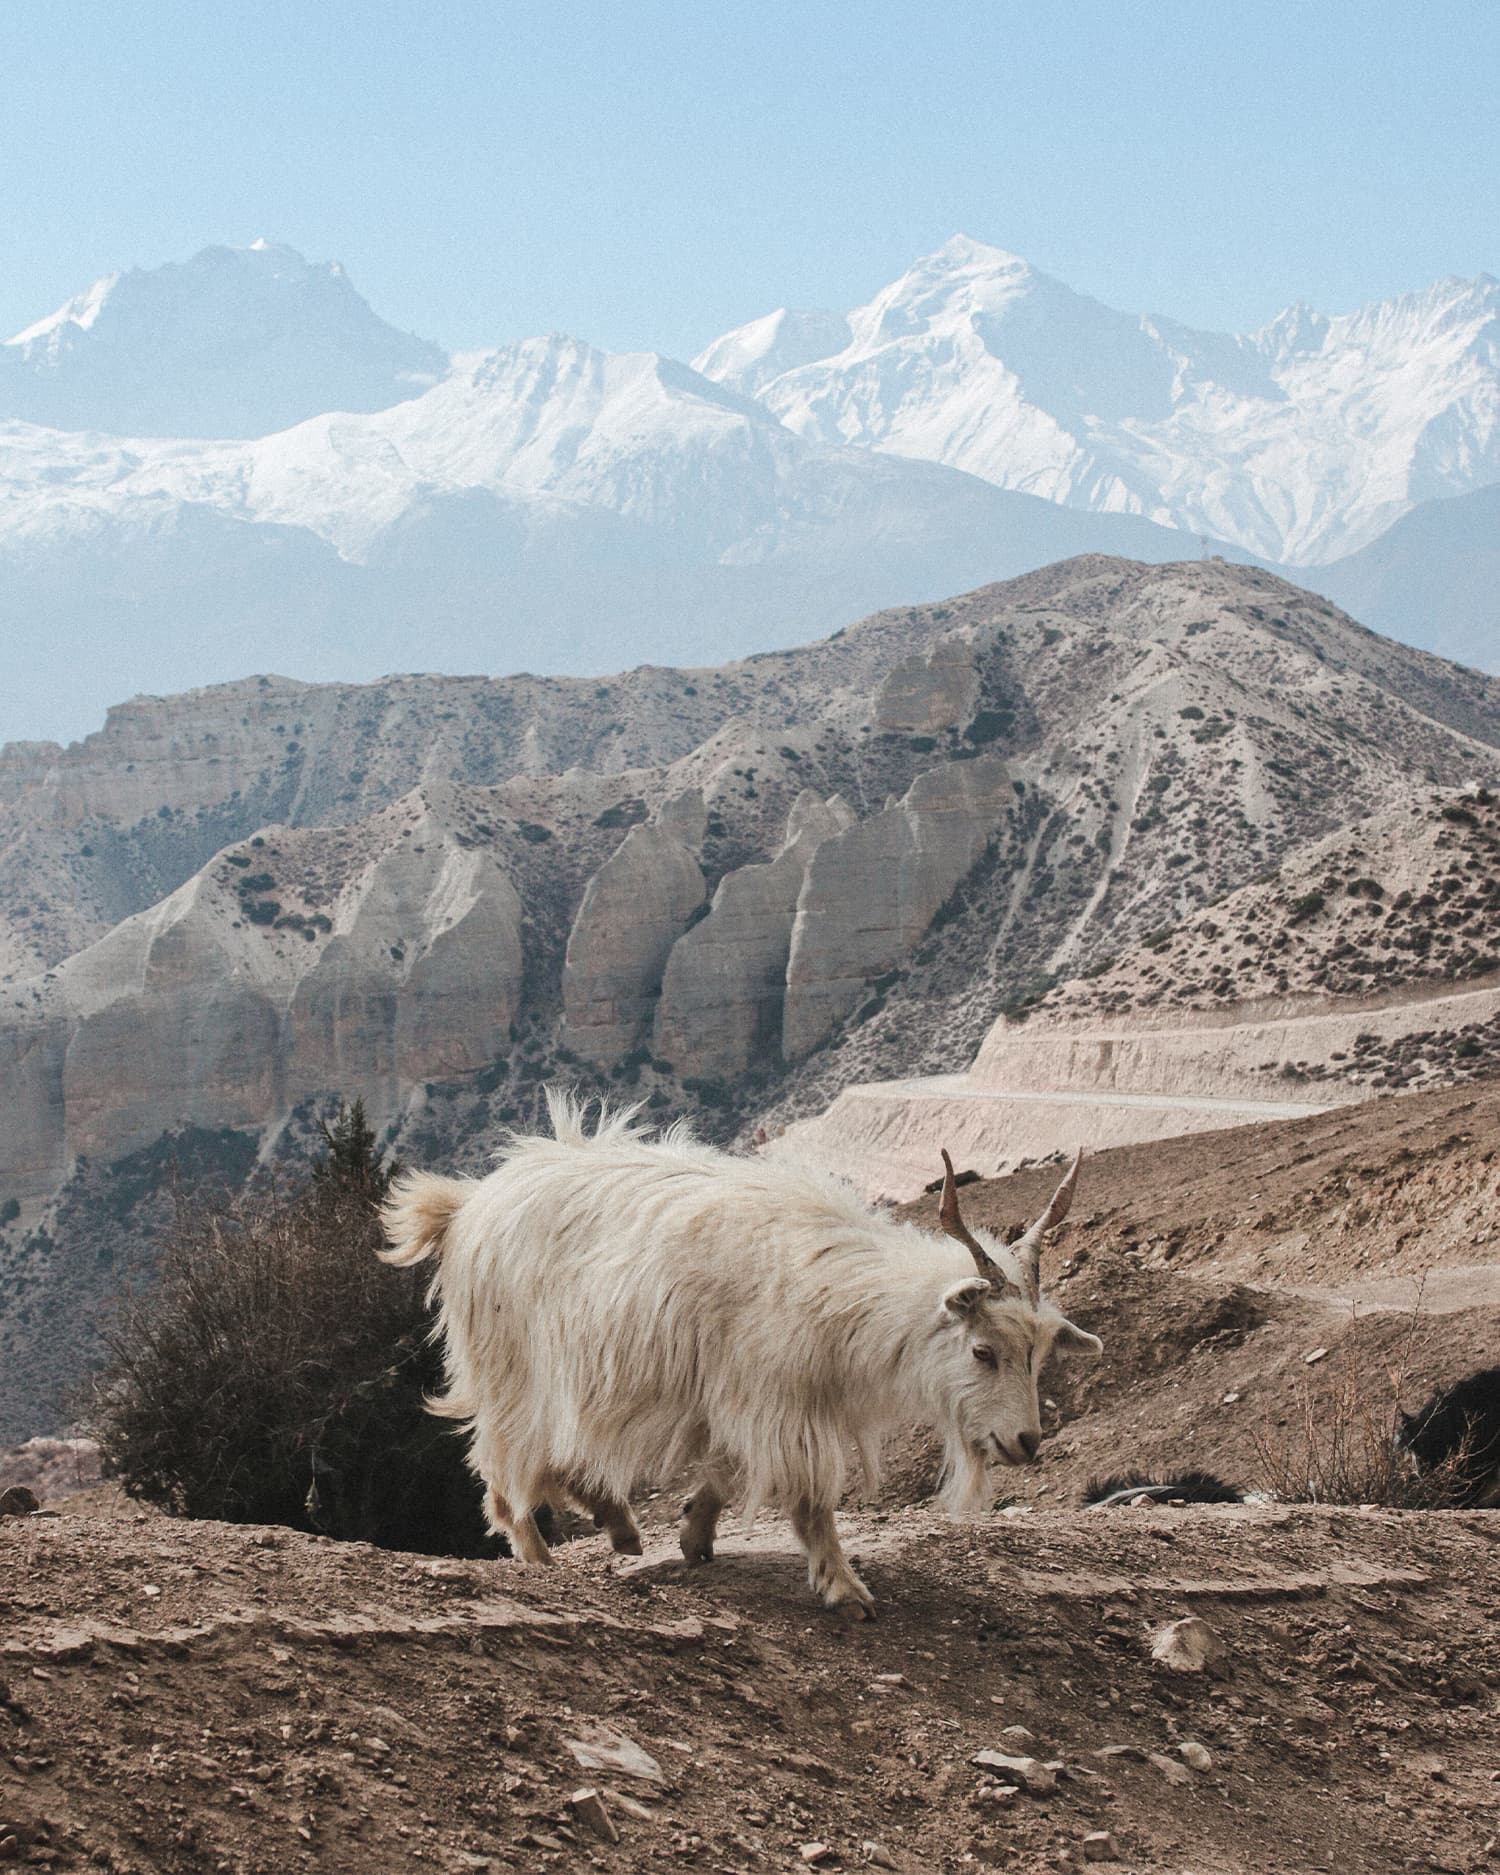 Cashmere goats walking through their natural habitat.